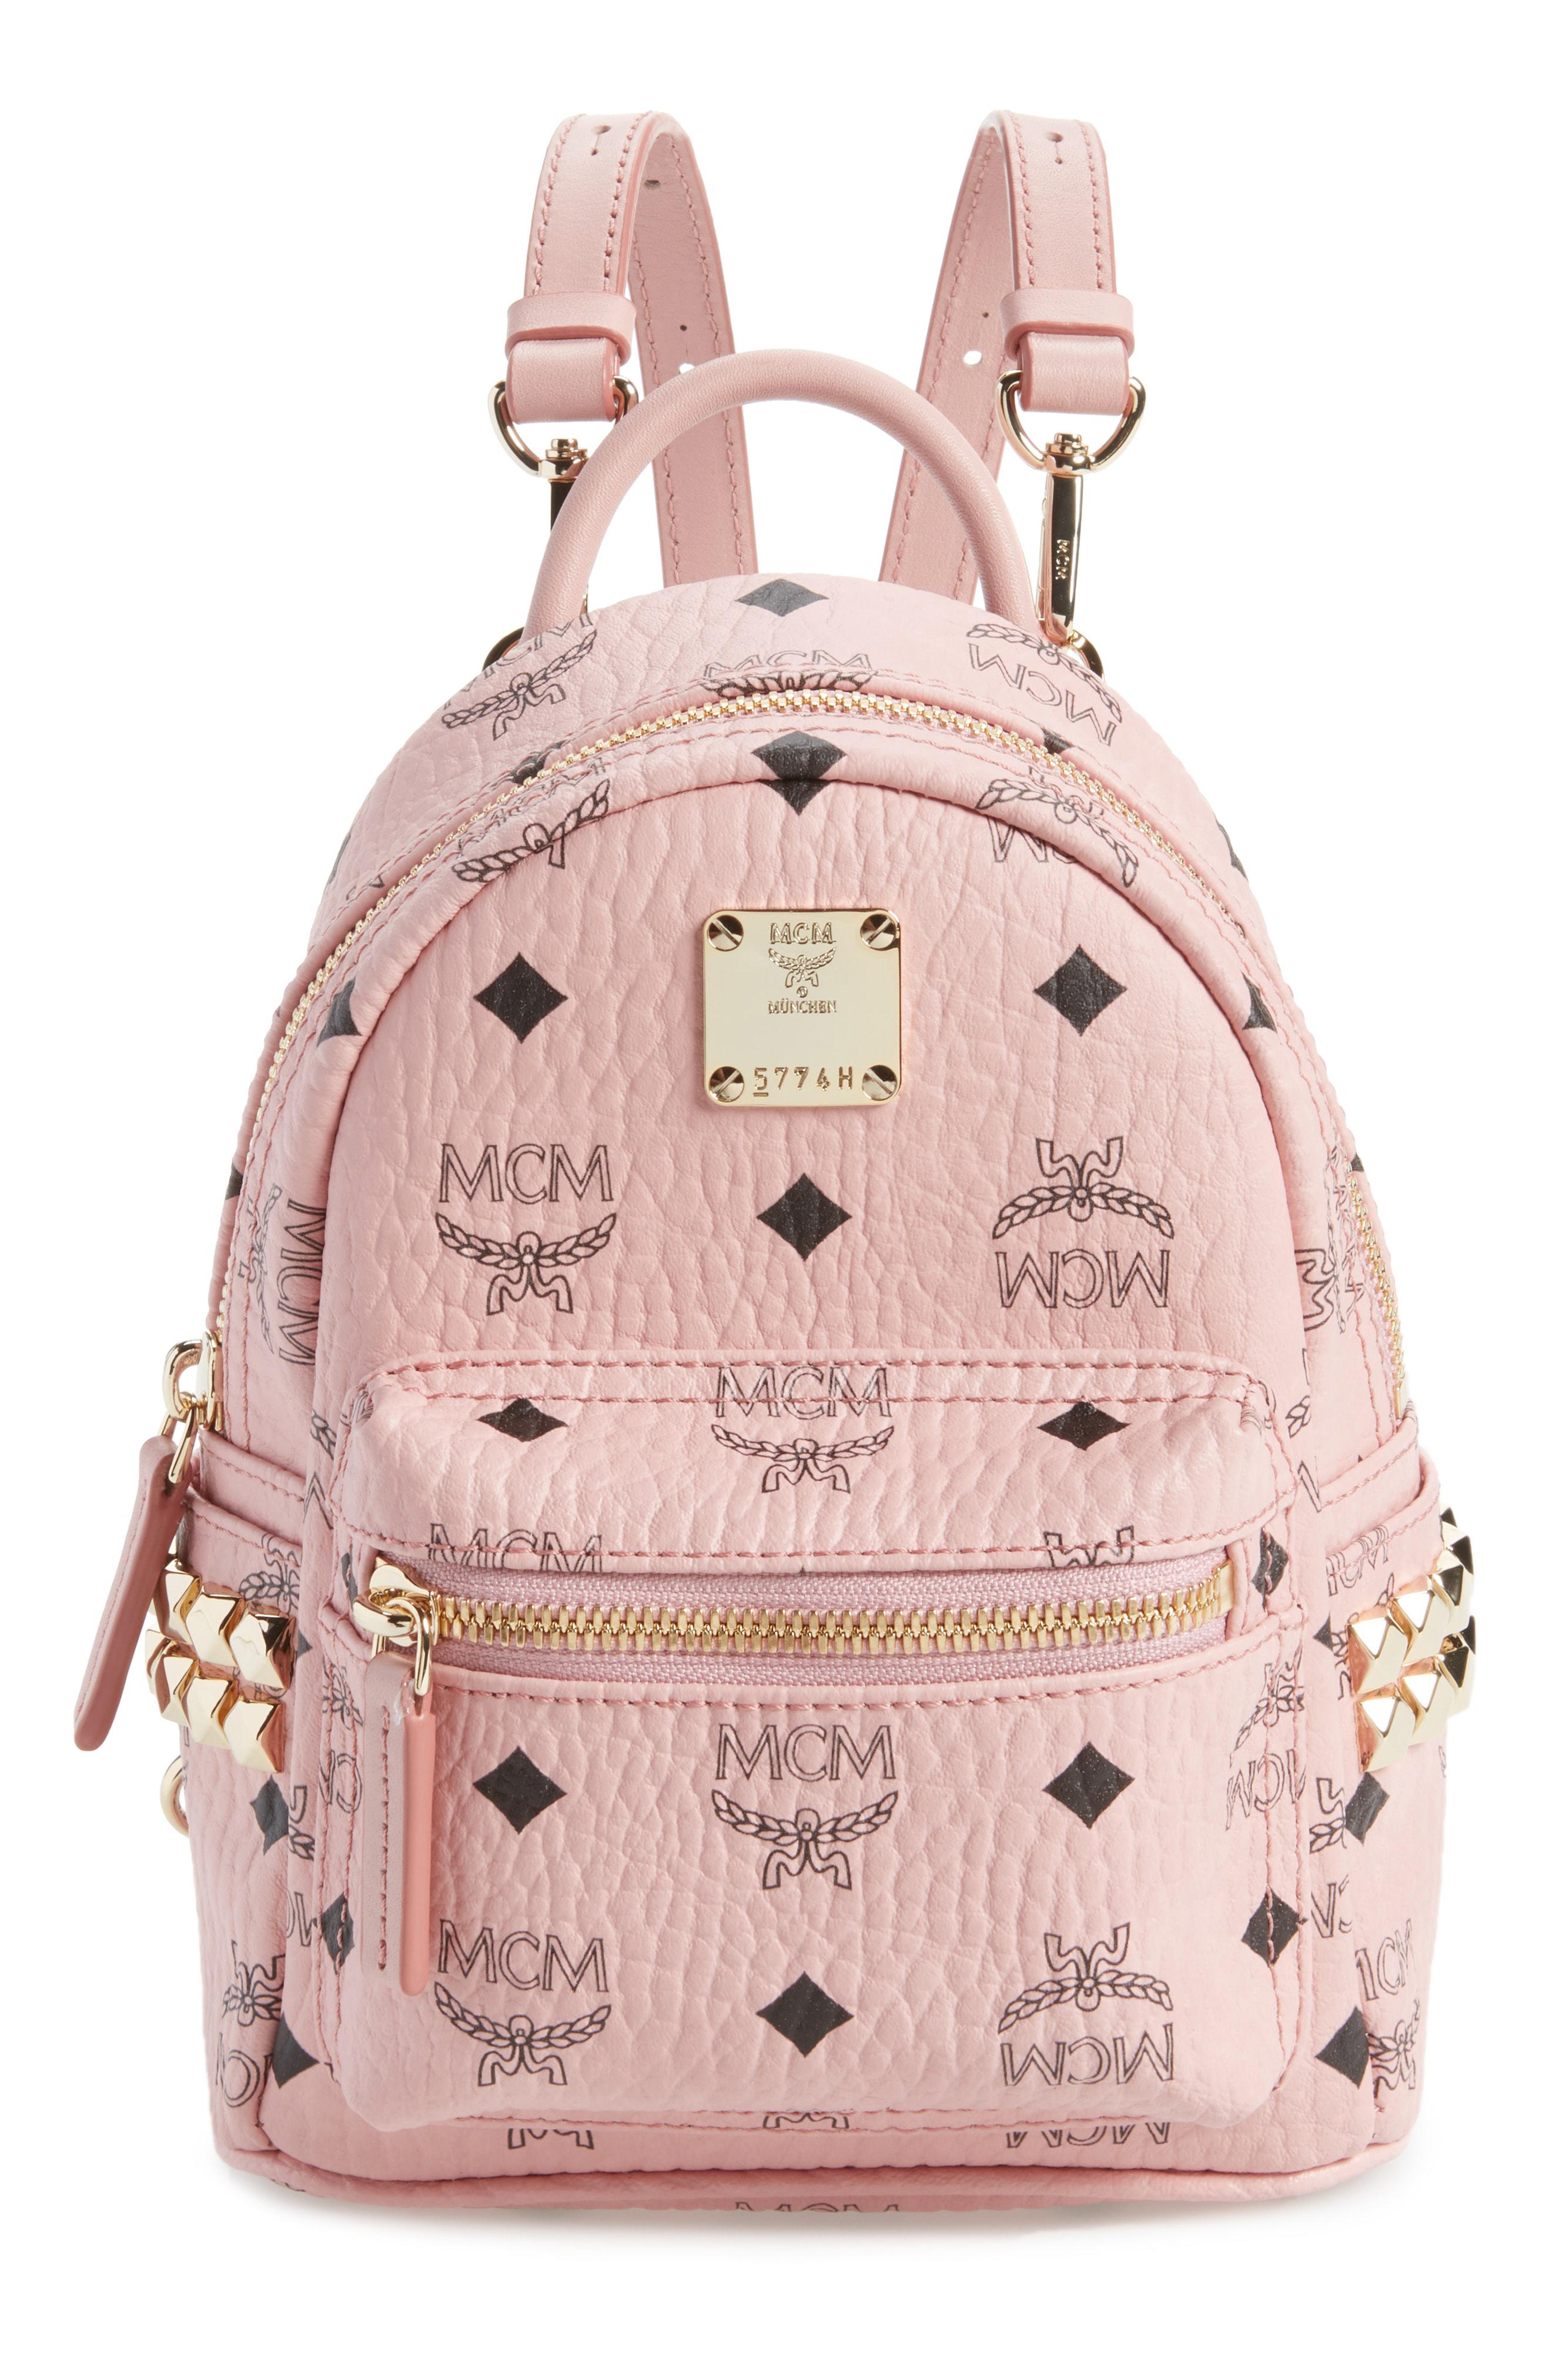 Mcm Mini Bag Pink :: Keweenaw Bay Indian Community